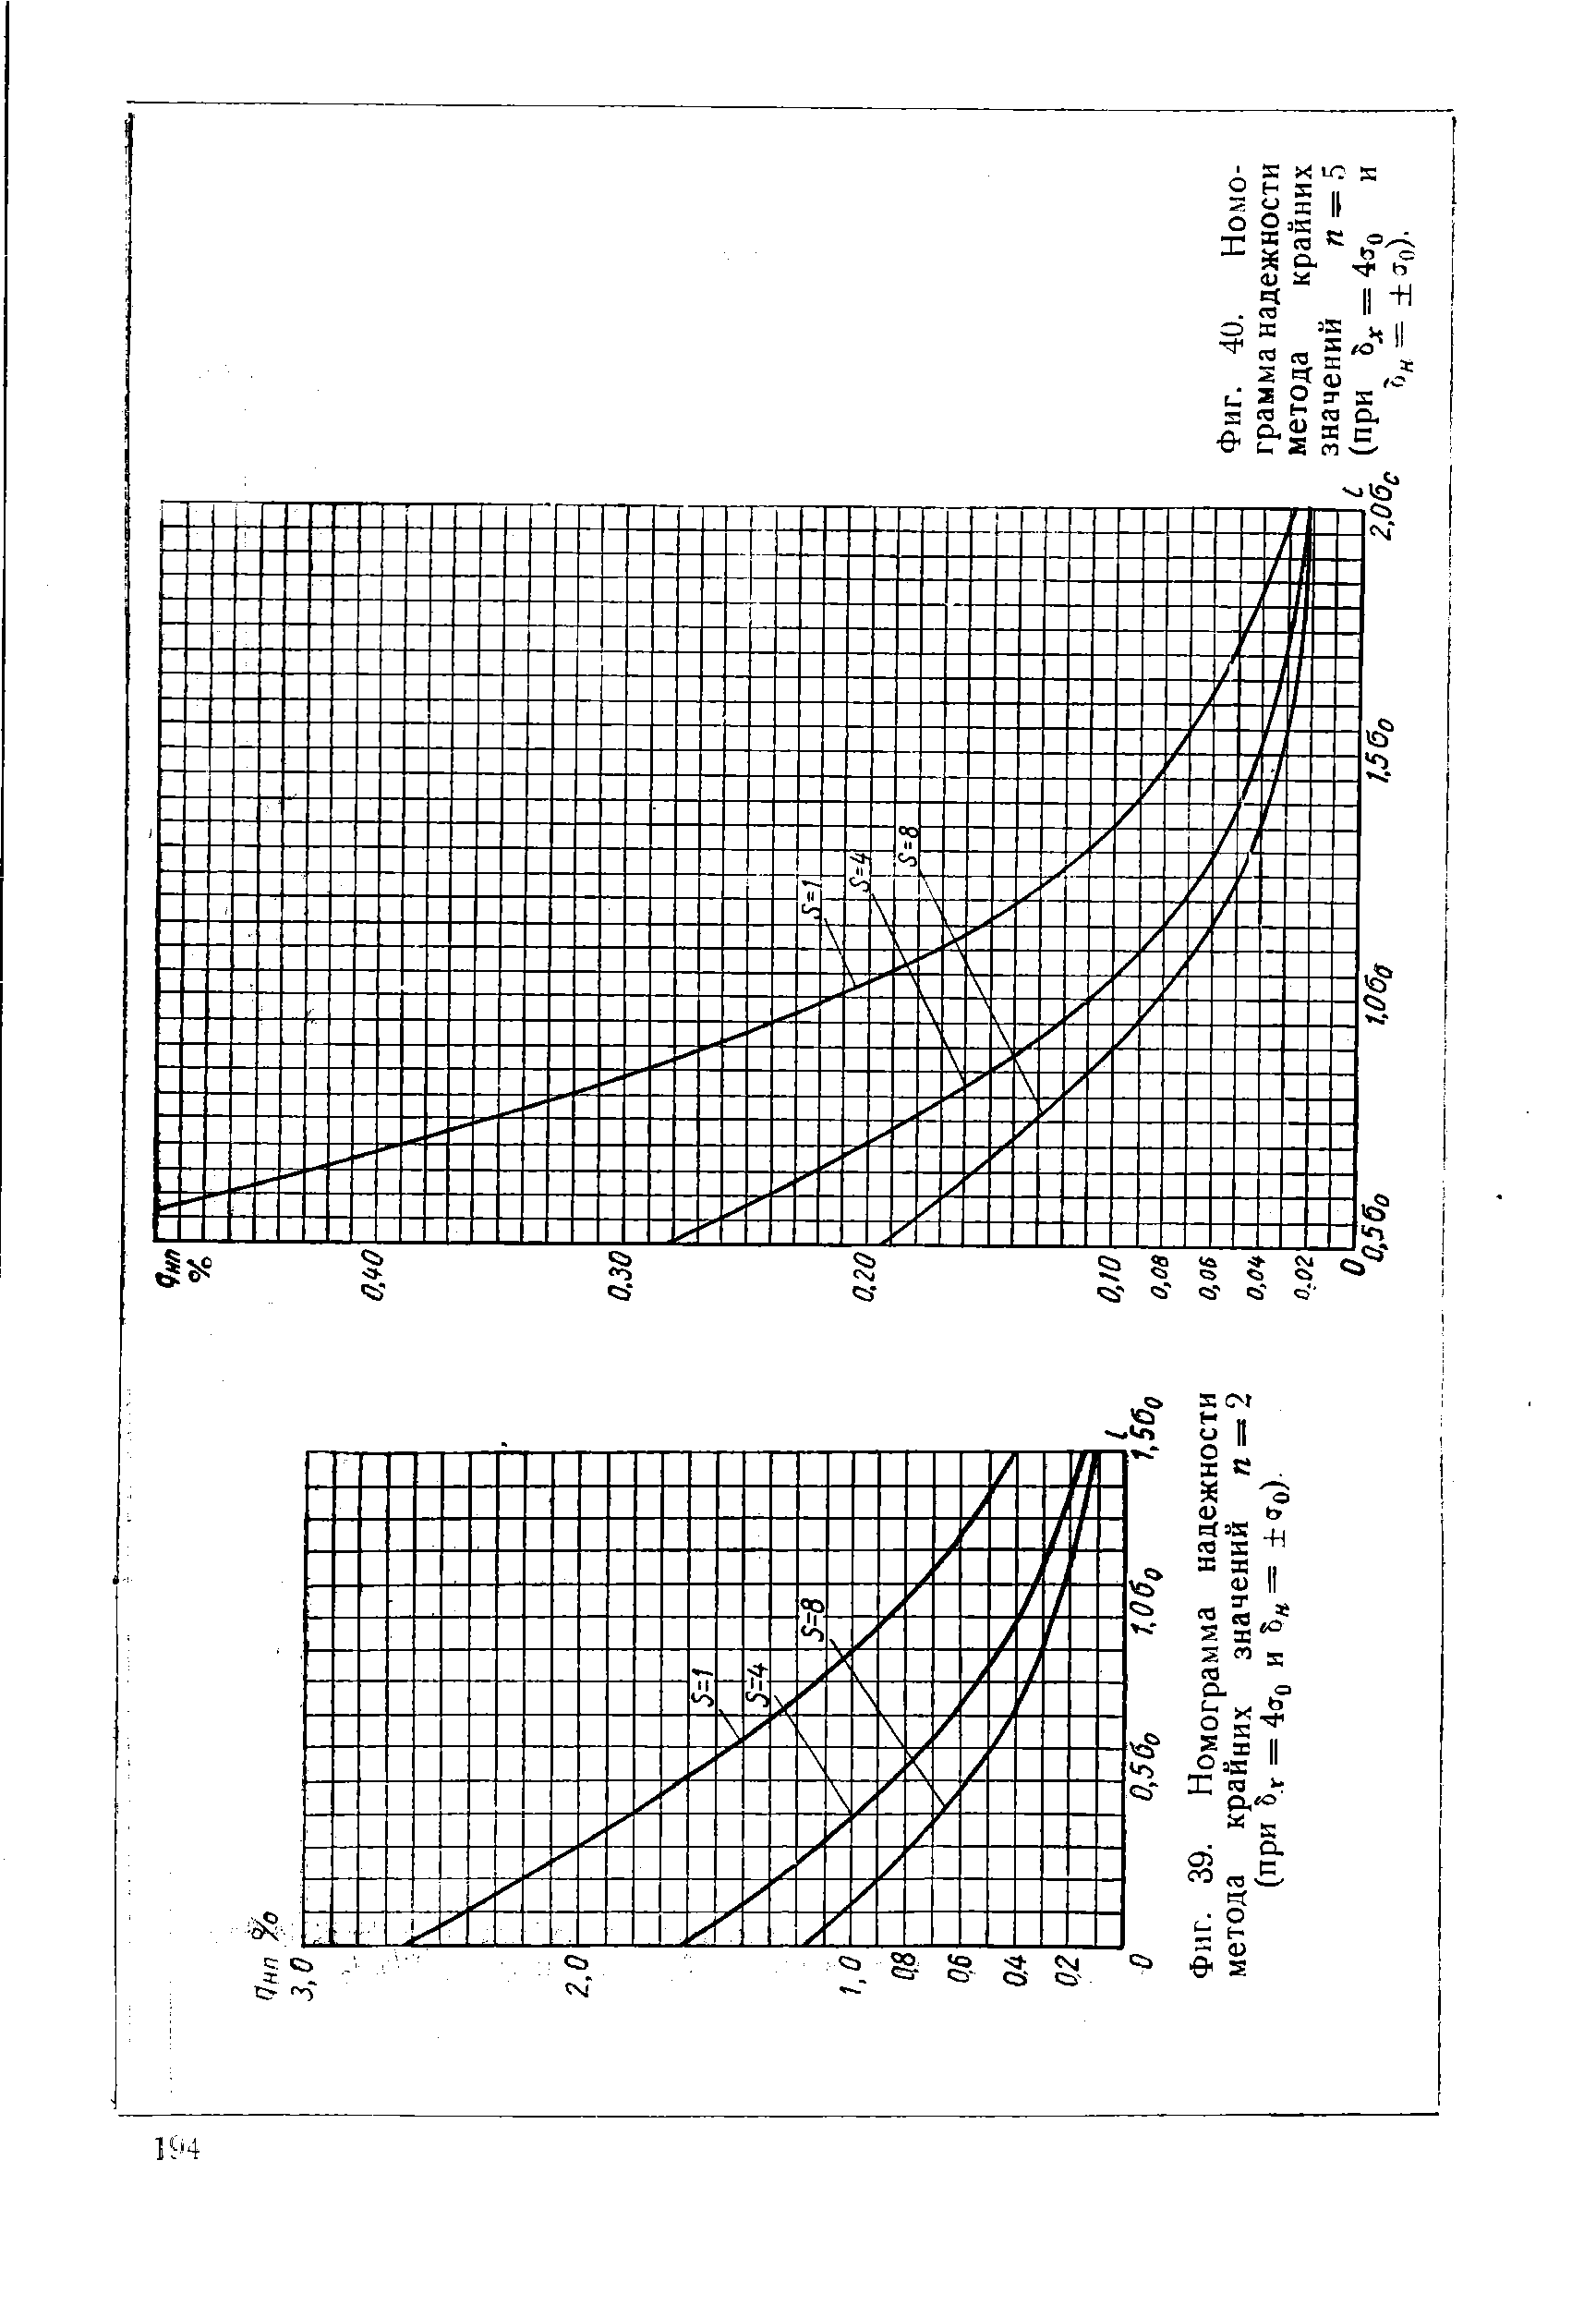 Фиг. 39. Номограмма надежности метода крайних значений и = 2 (при 5г = 4ад и = Ф о)
